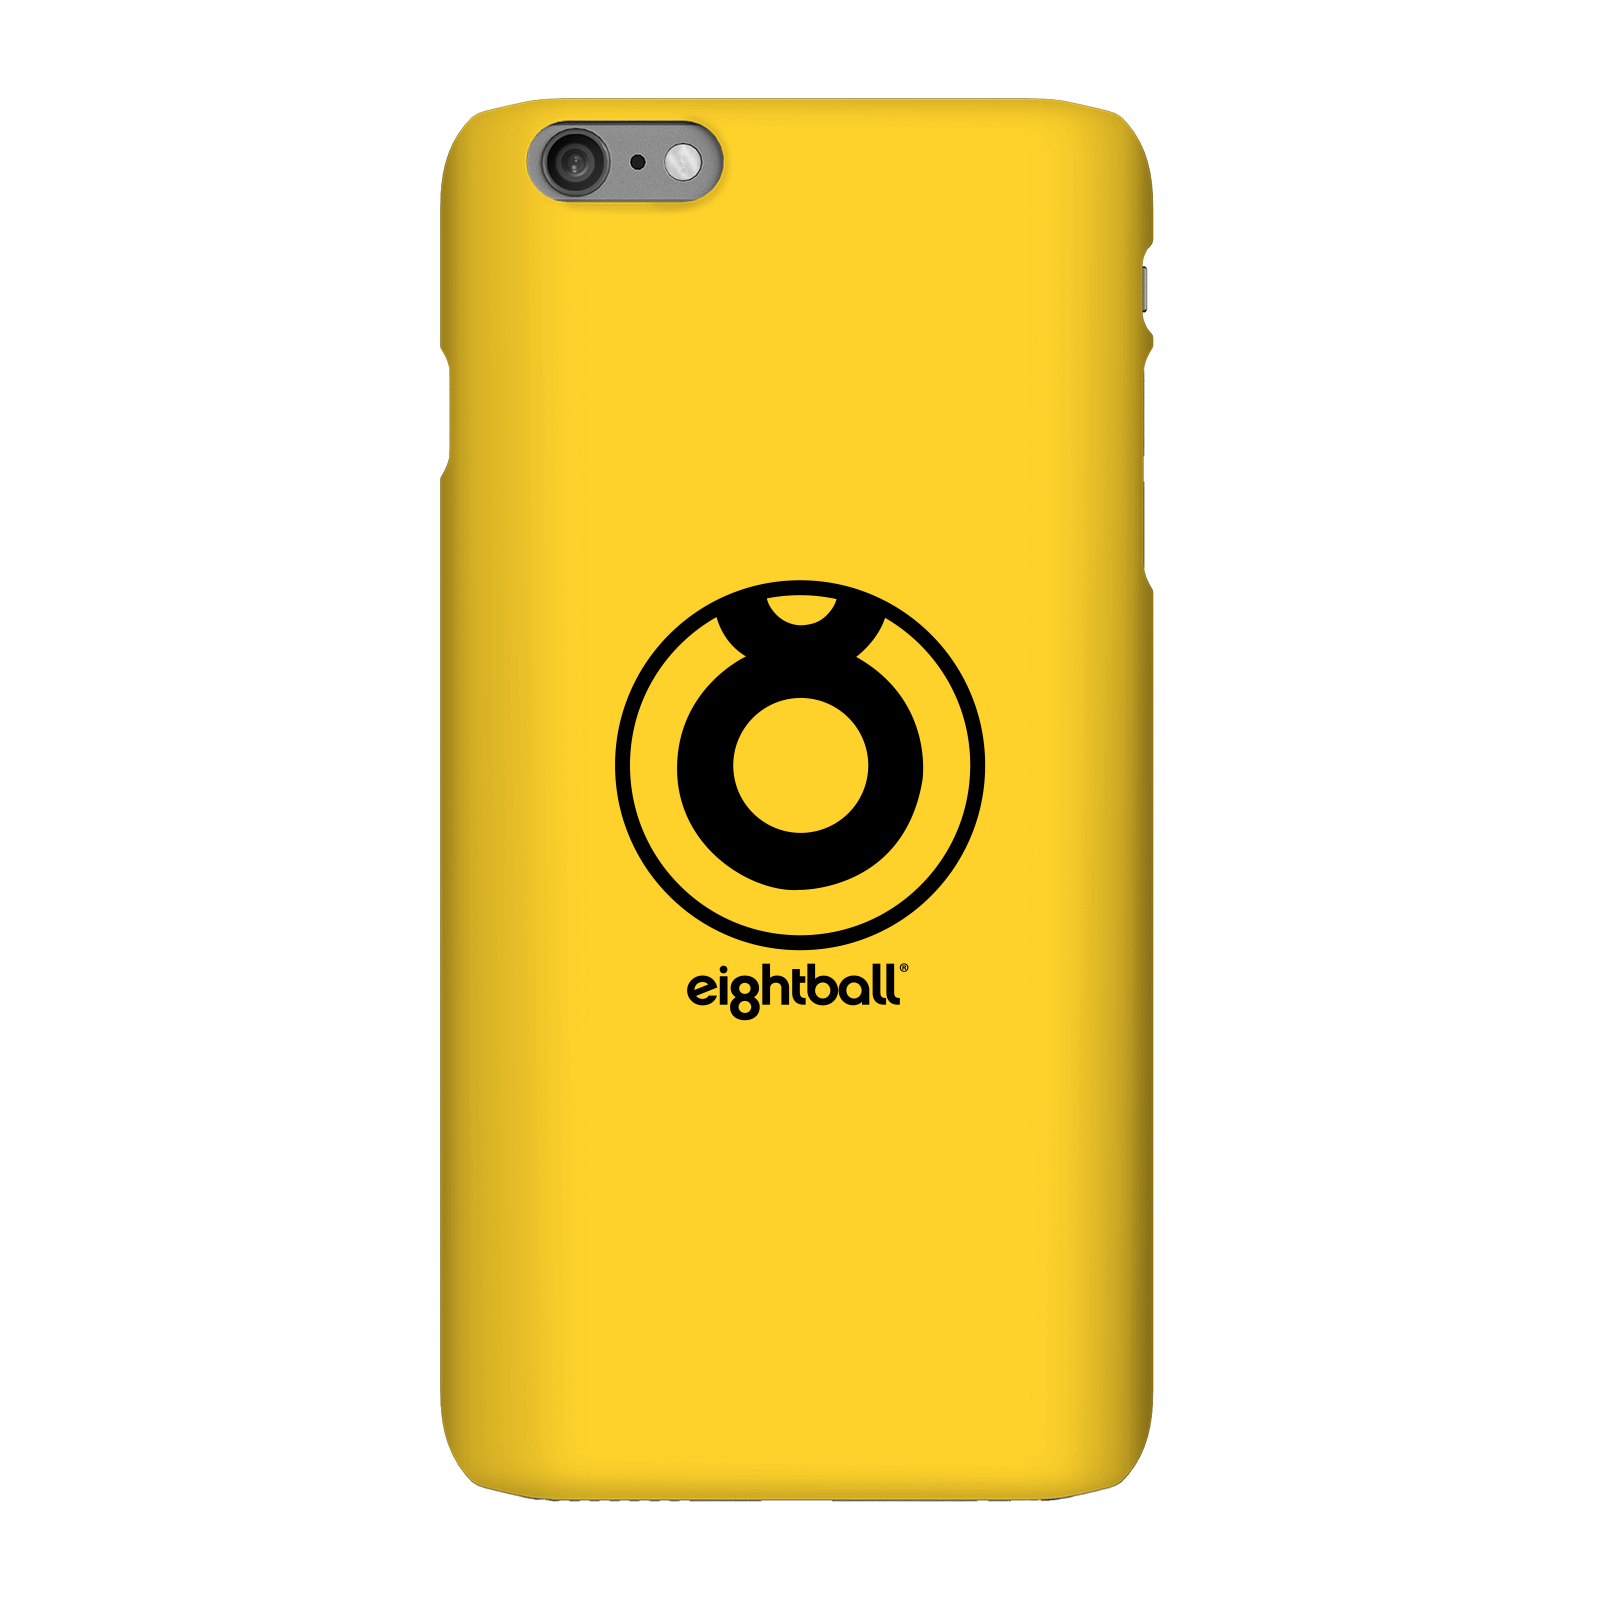 Funda Móvil Ei8htball Large Circle Logo para iPhone y Android - iPhone 6 Plus - Carcasa rígida - Mate